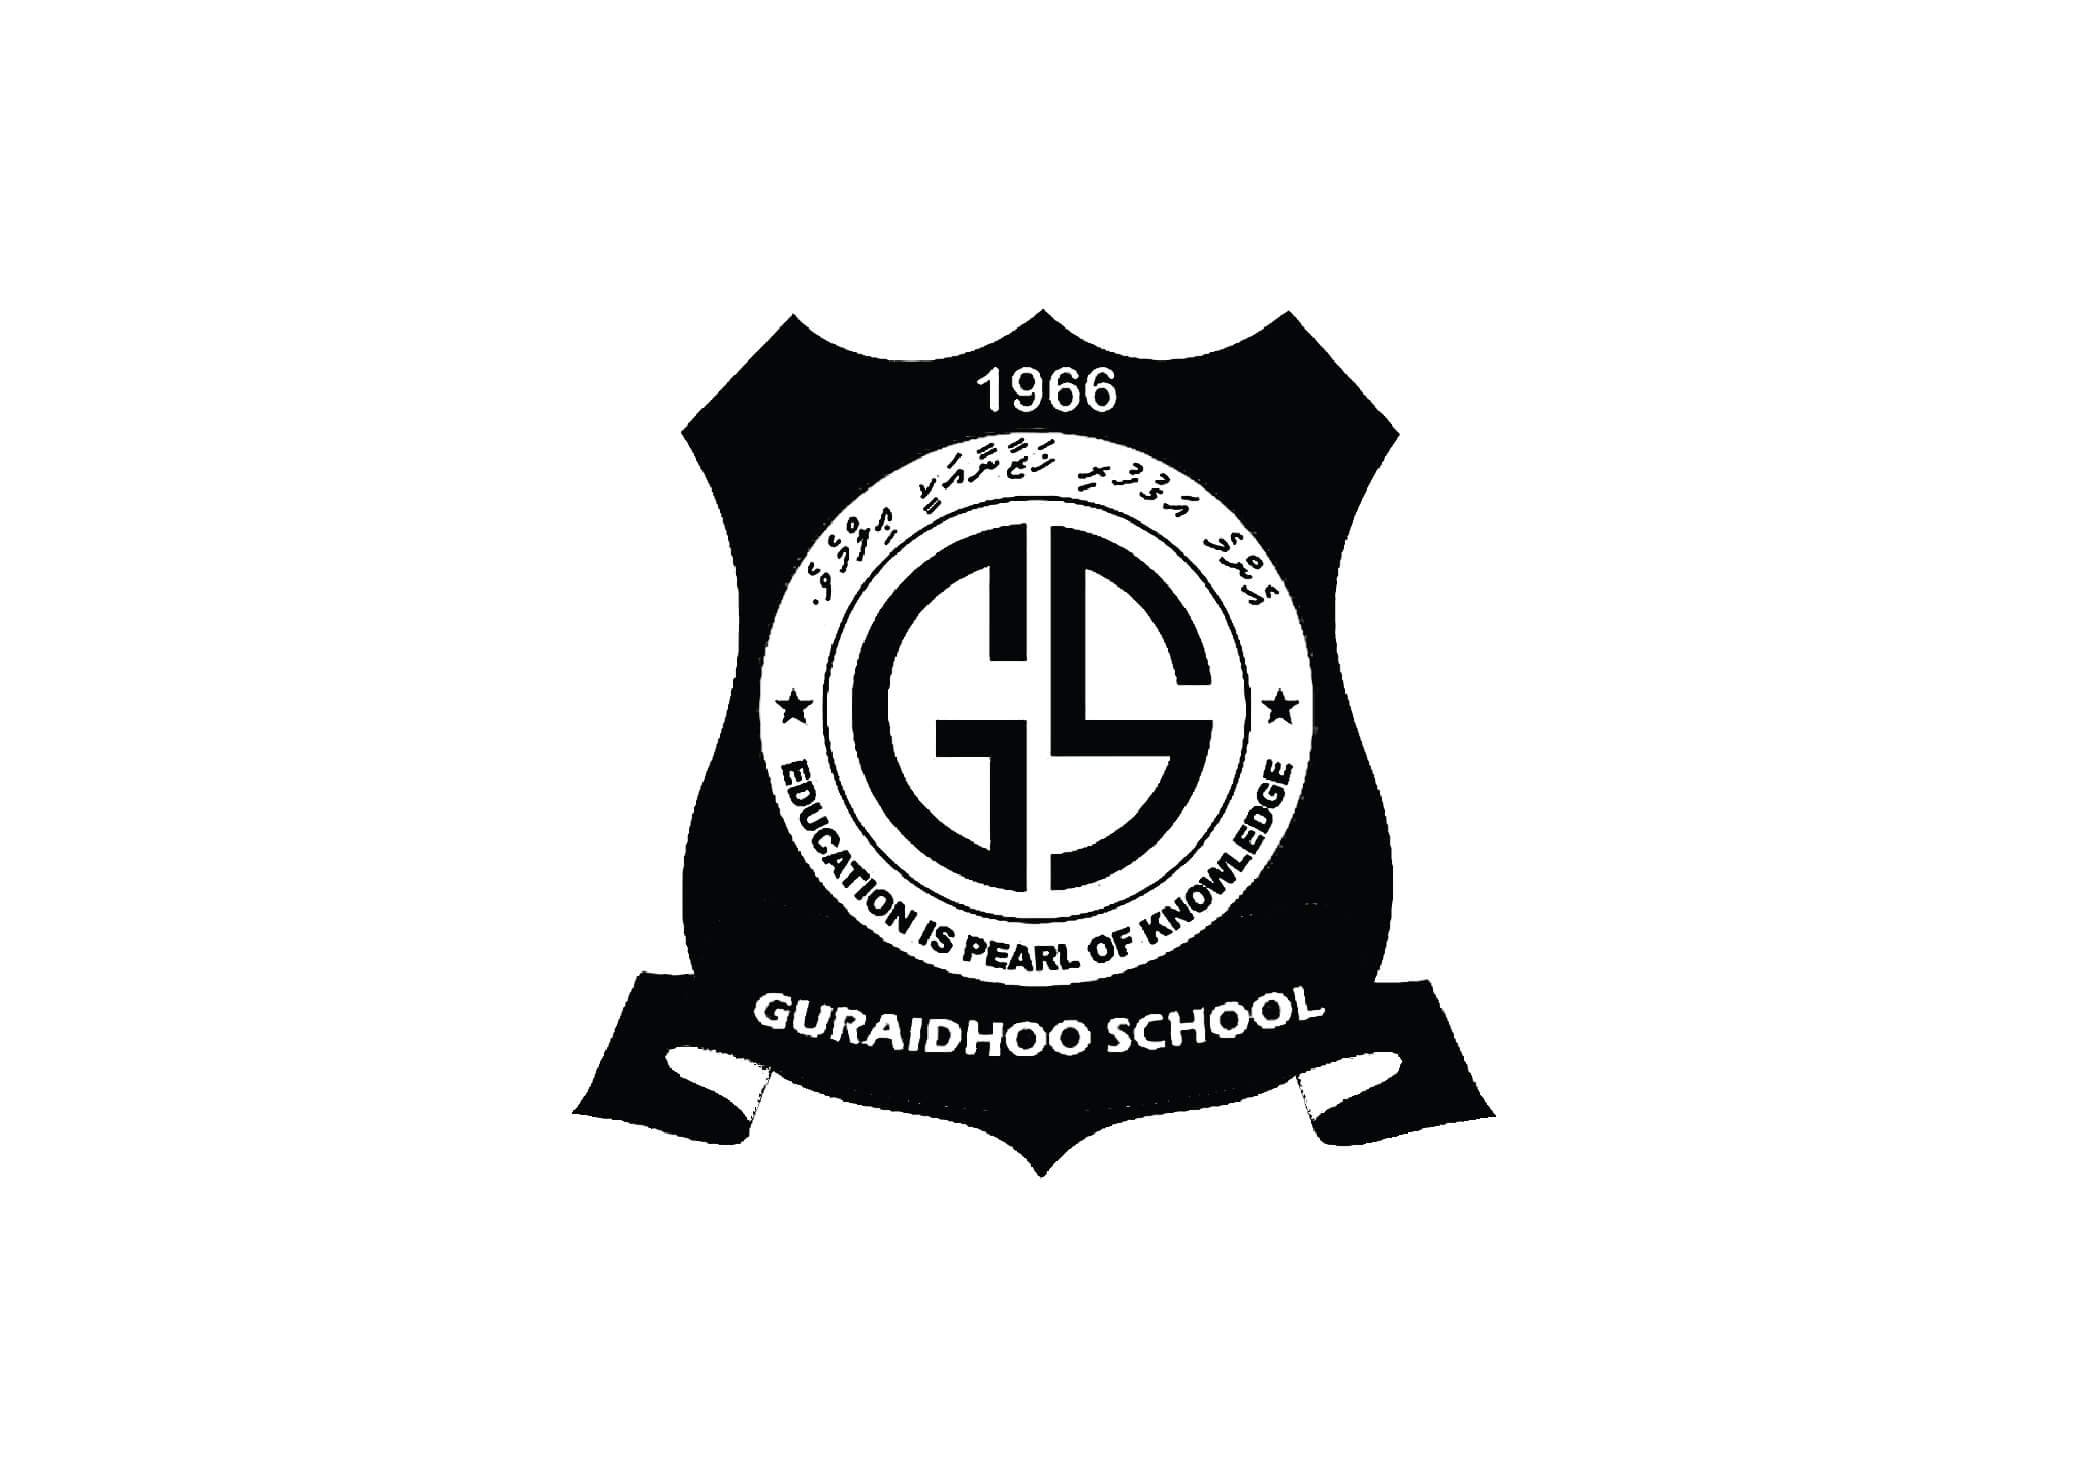 Guraidhoo School